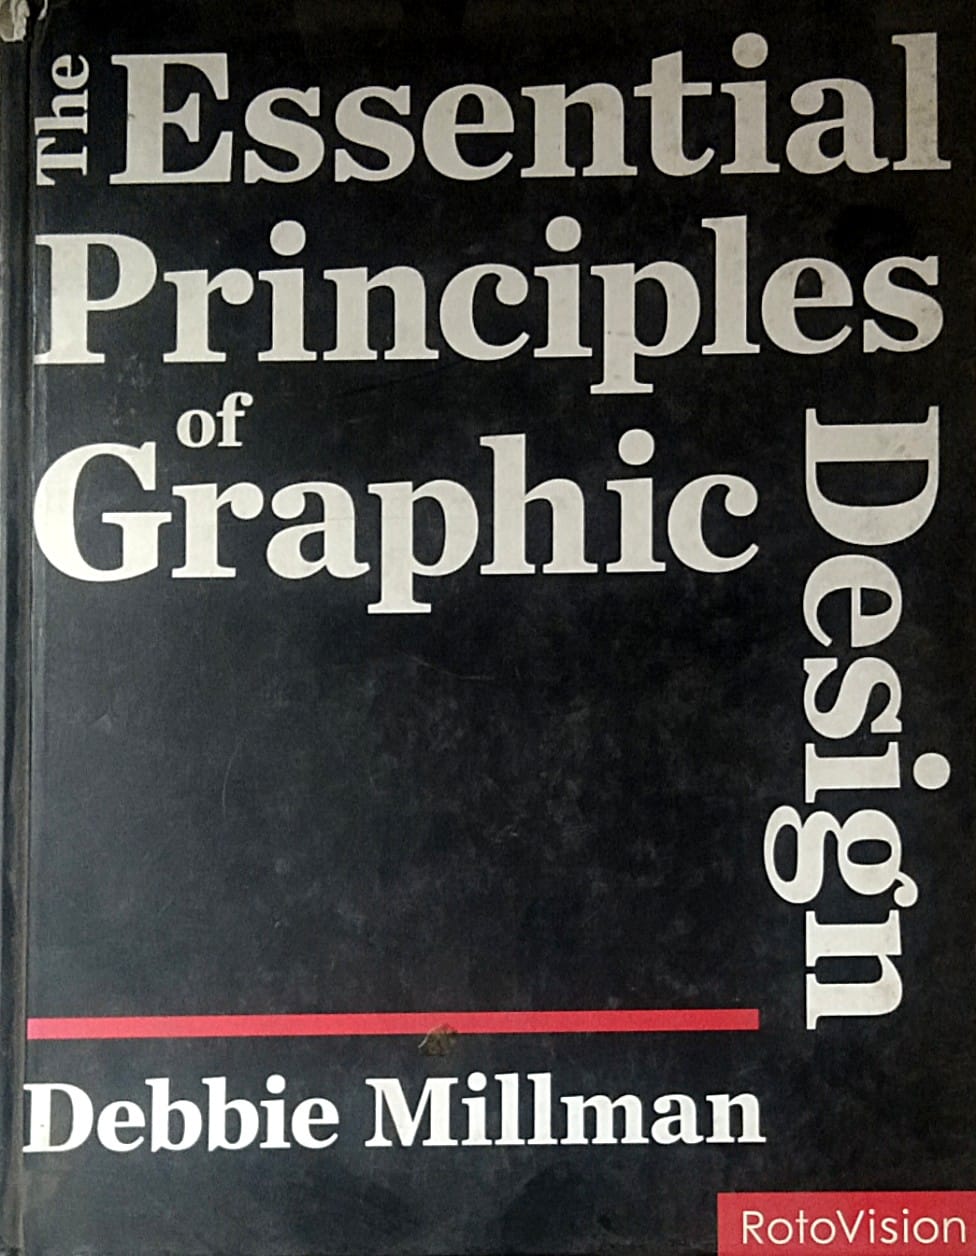 THE ESSENTIAL PRINCIPLES OF GRAFIC DESIGN  by Debbie Millman